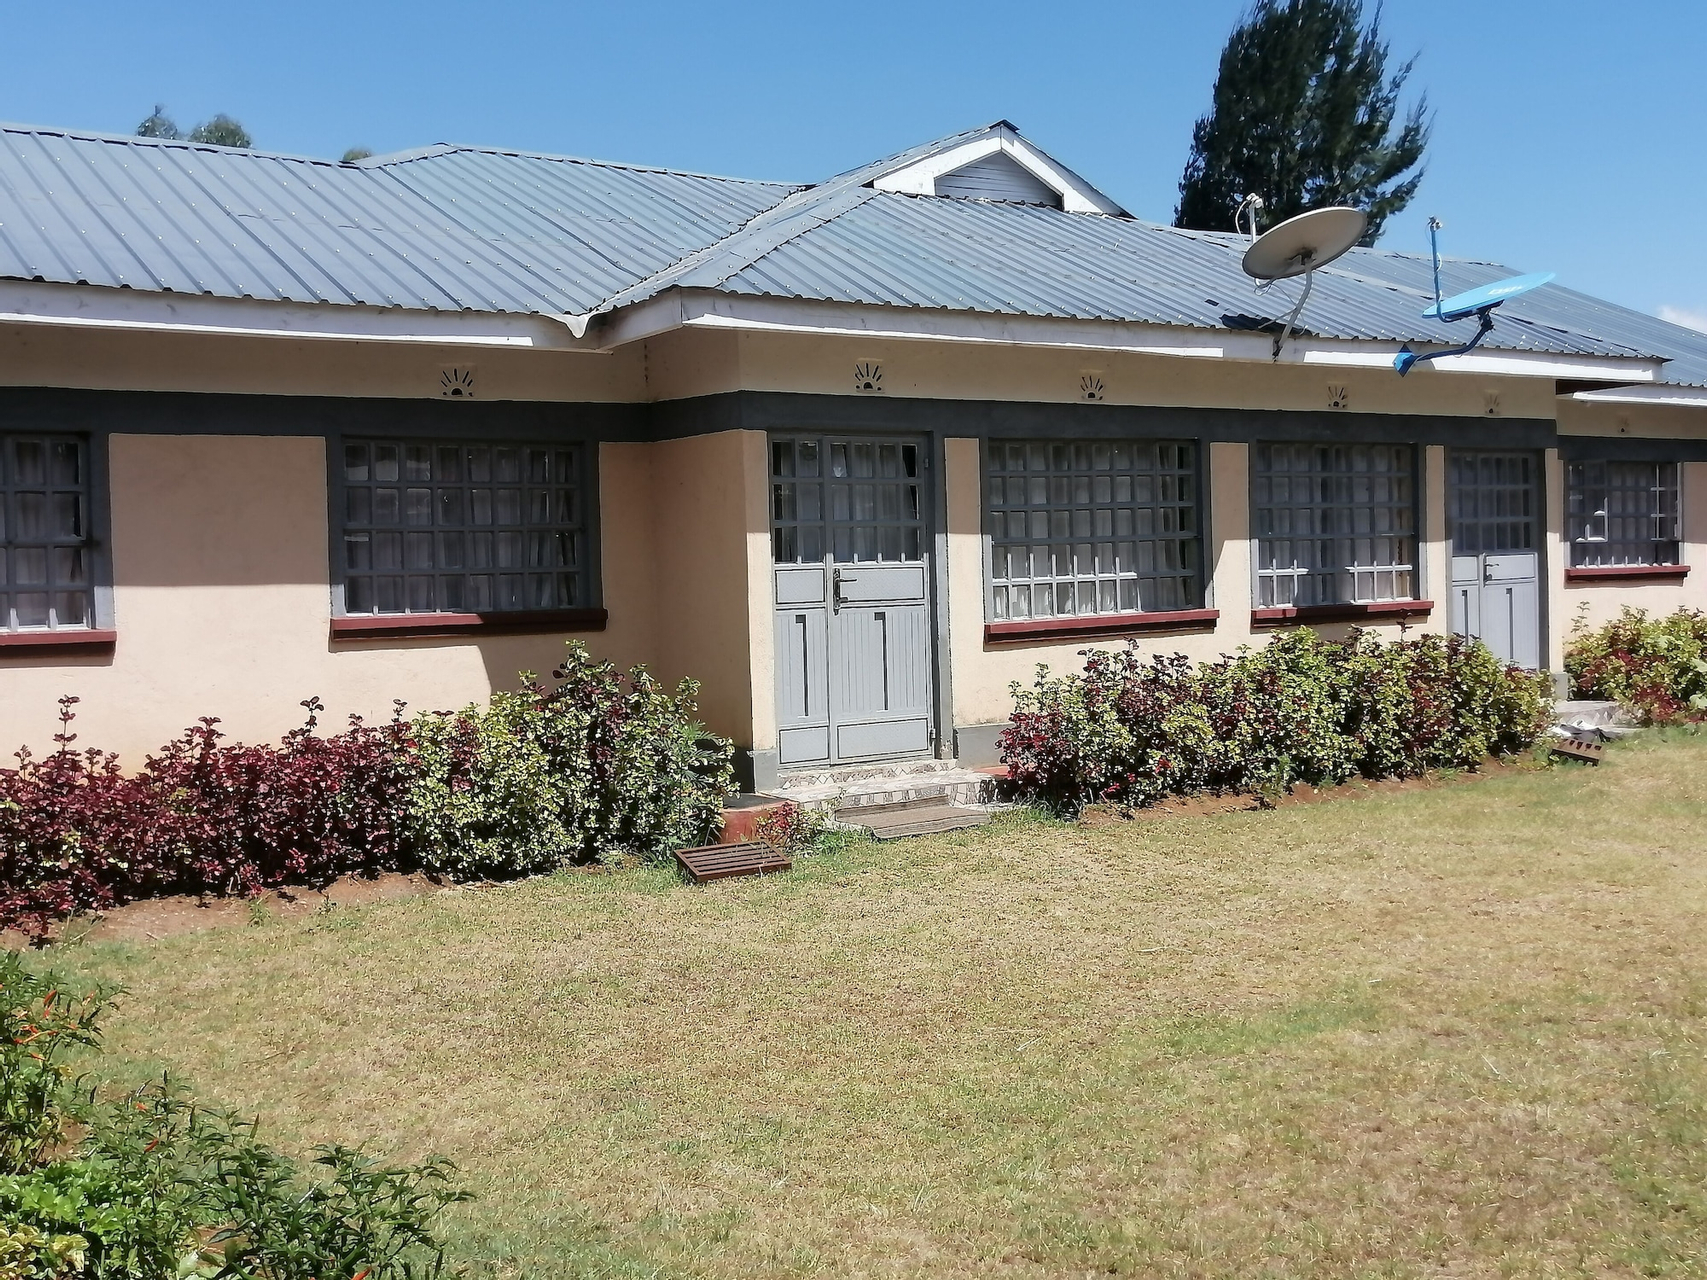 The Rhine Guest House-Eldoret, Moiben